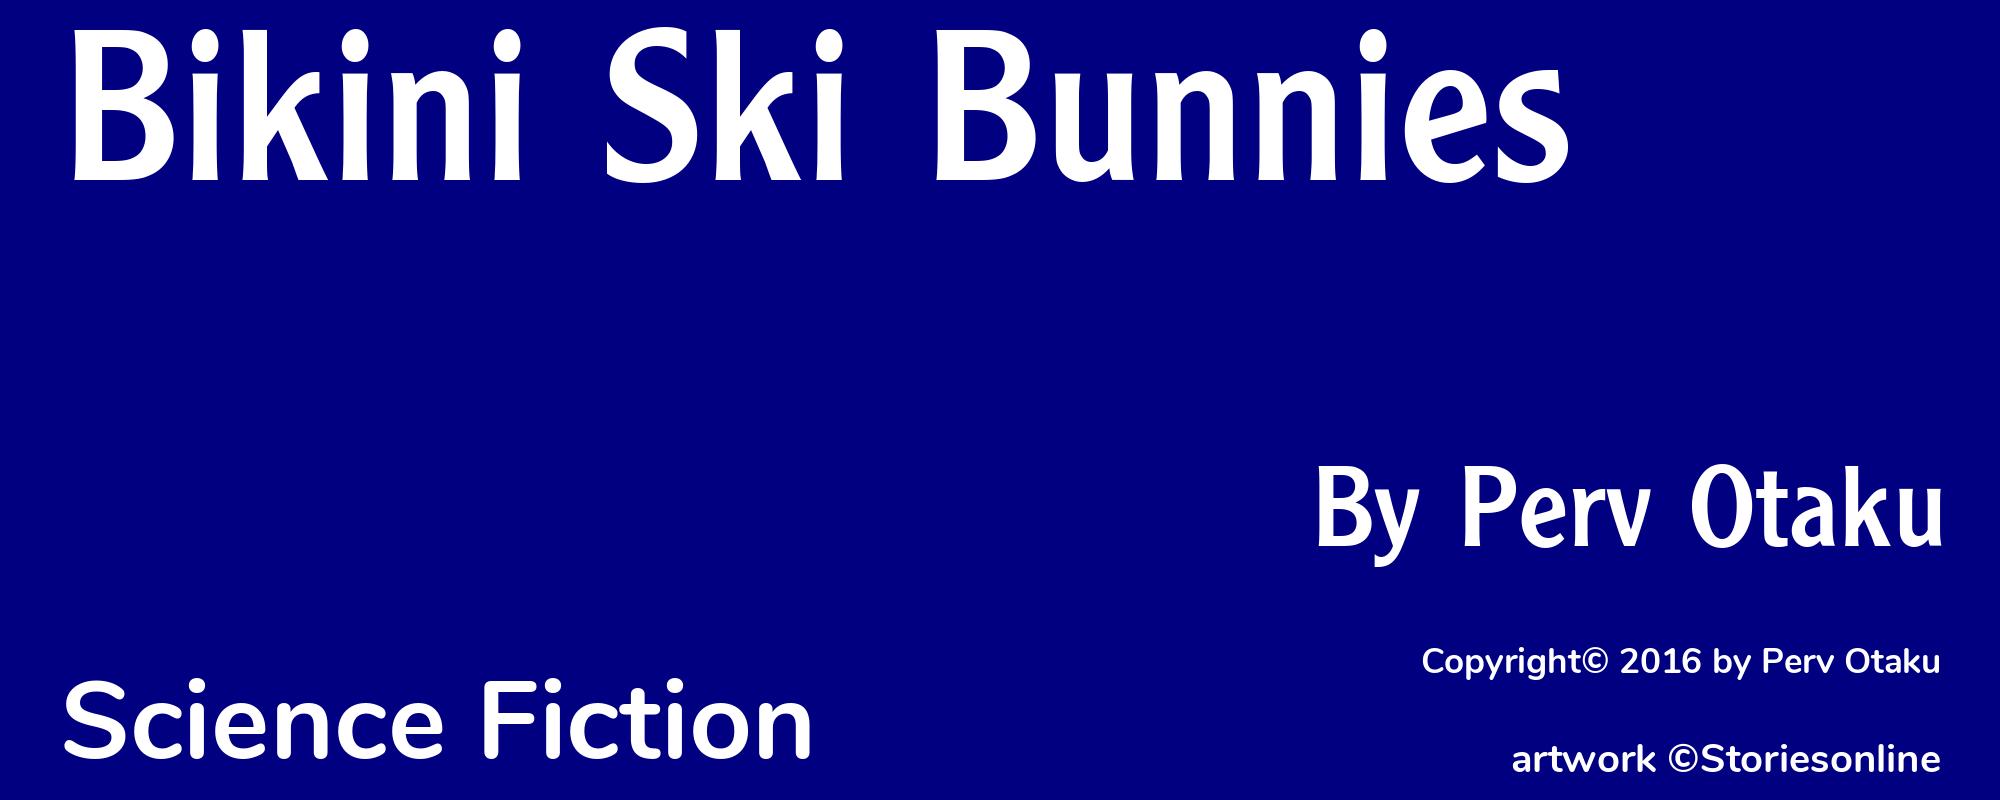 Bikini Ski Bunnies - Cover